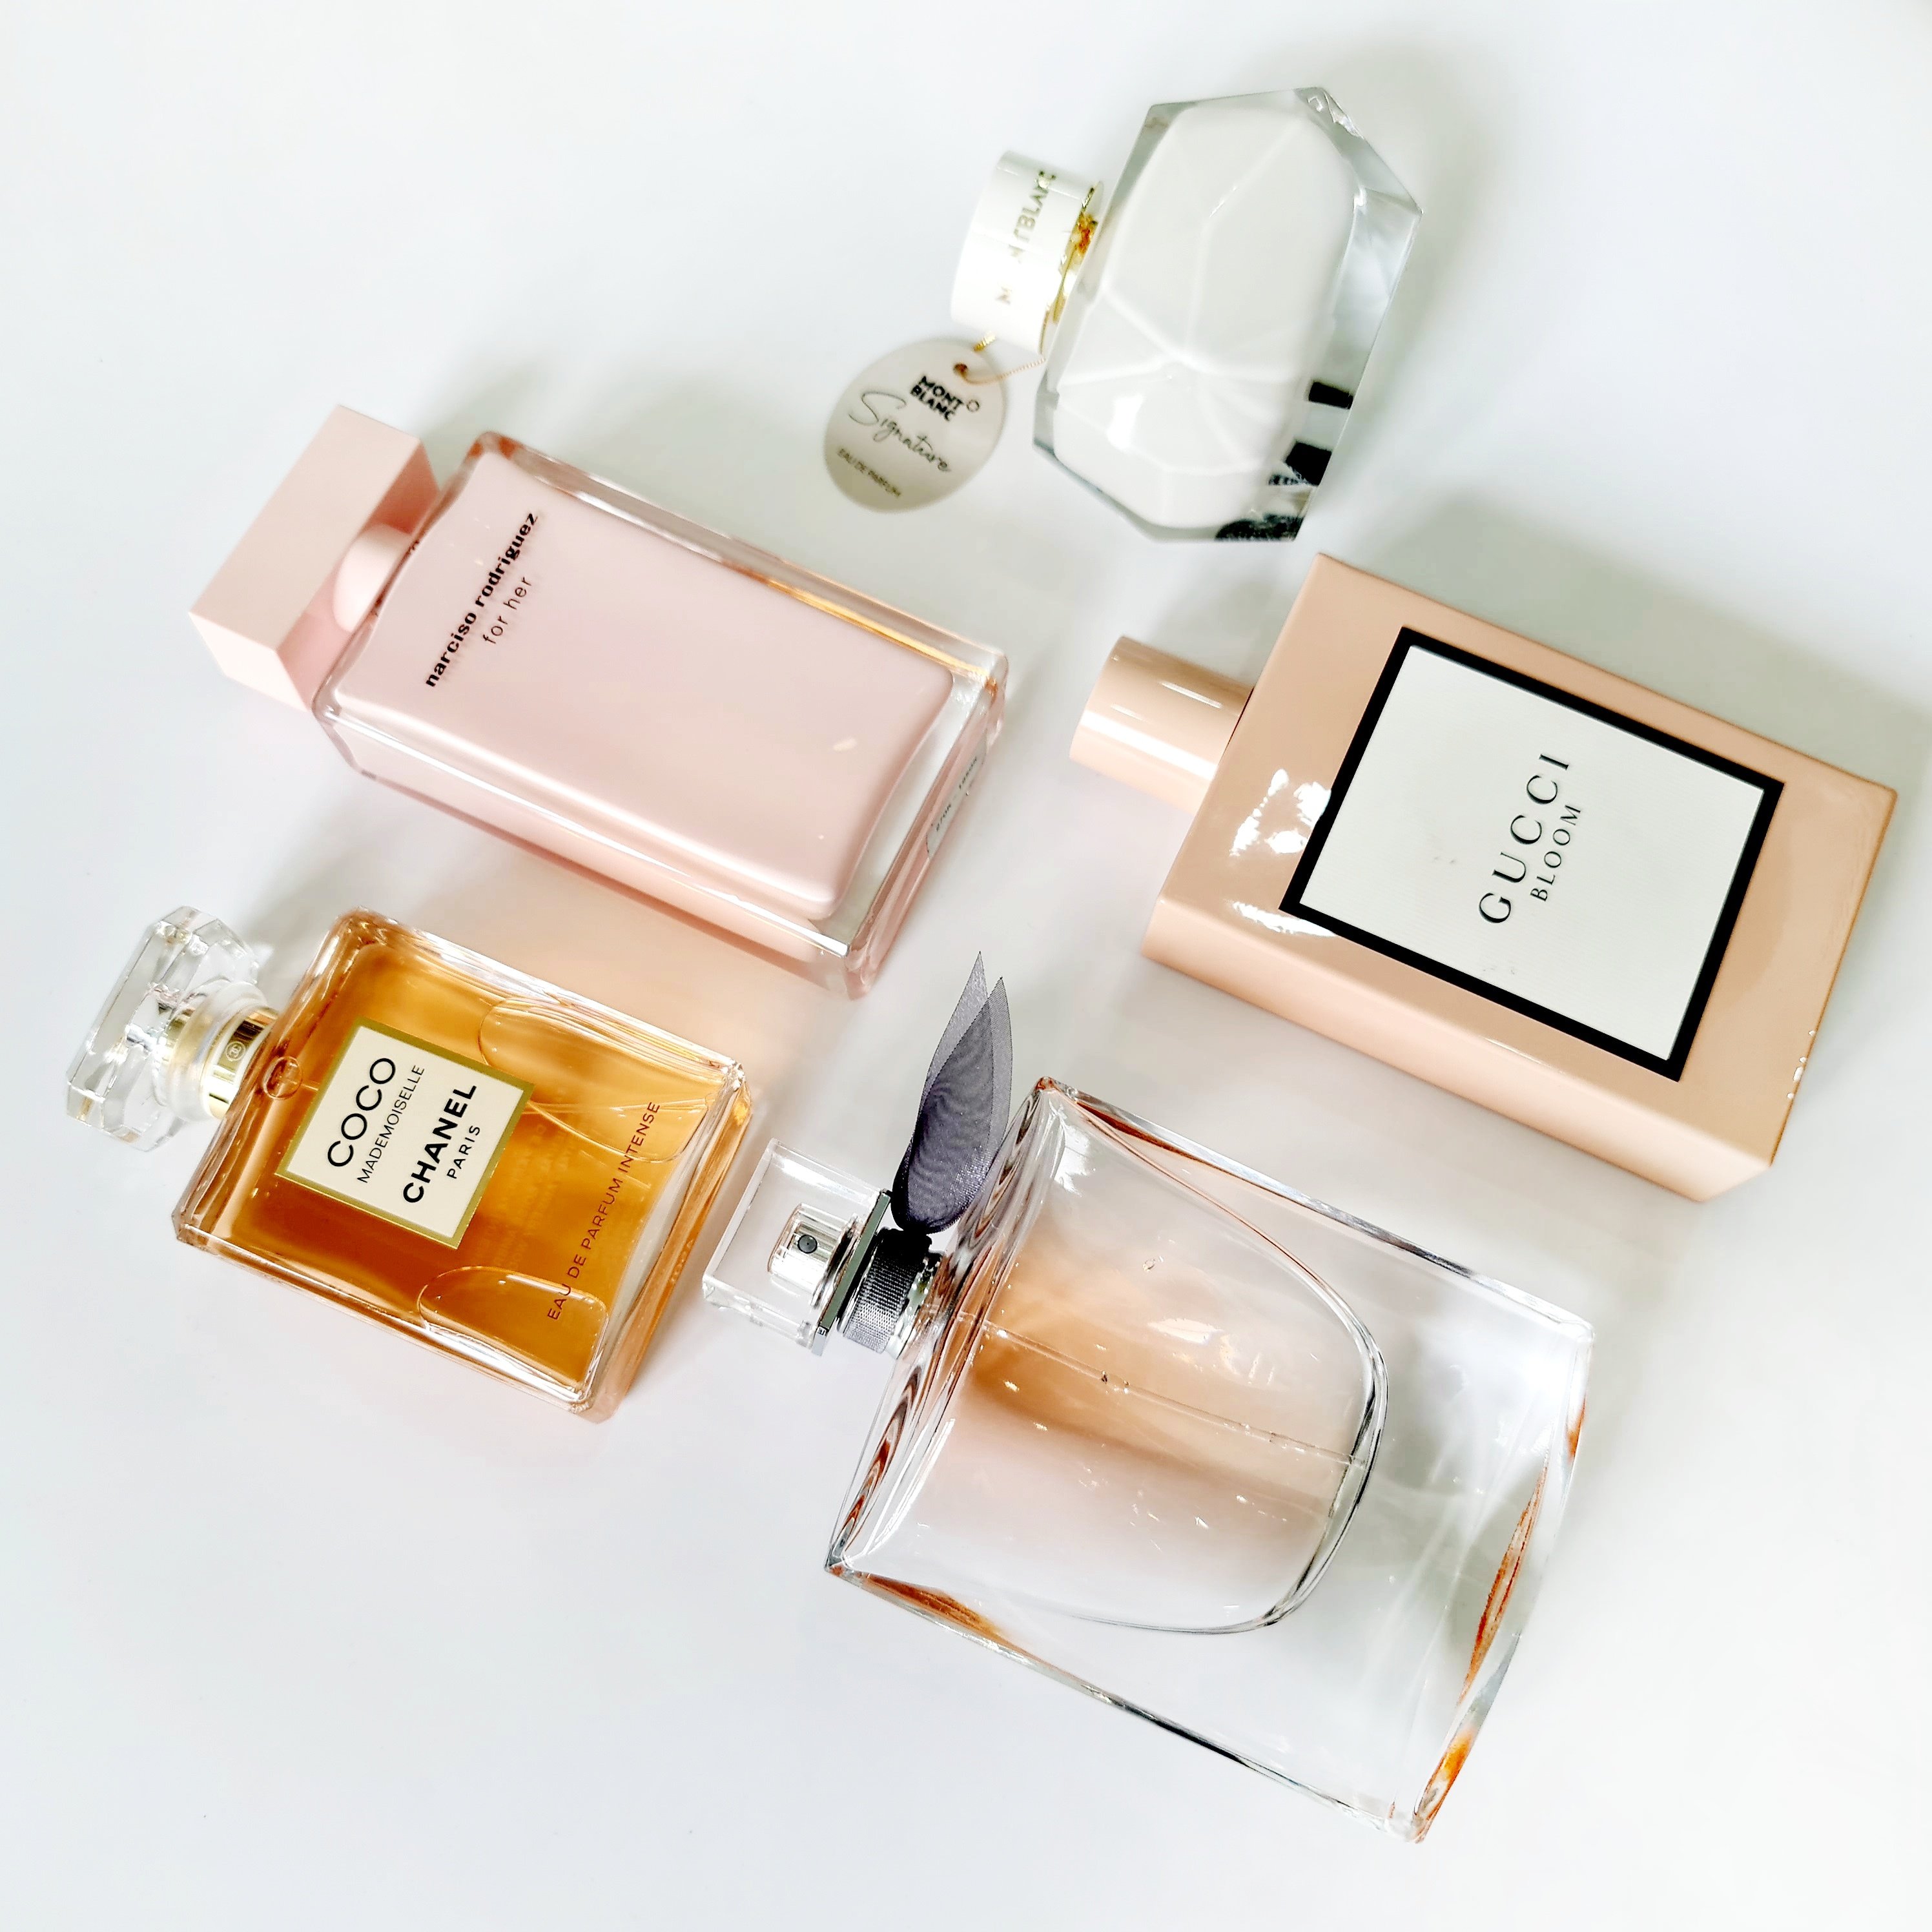 Les Exclusives De CHANEL  chanel chanelfragrance chanelperfume f   Chanel  TikTok